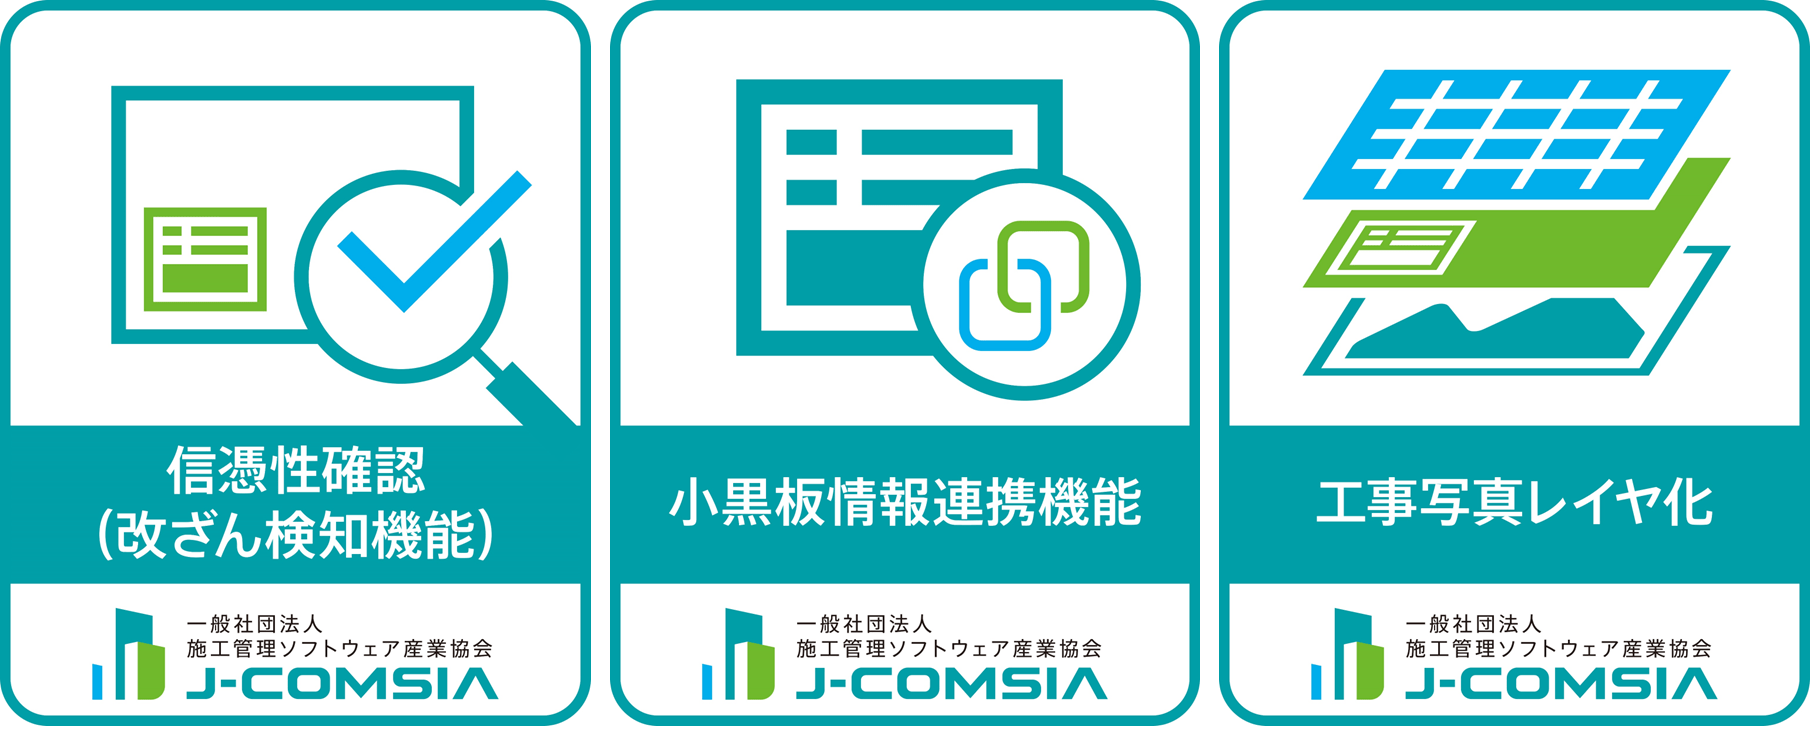 J-COMSIA 認定